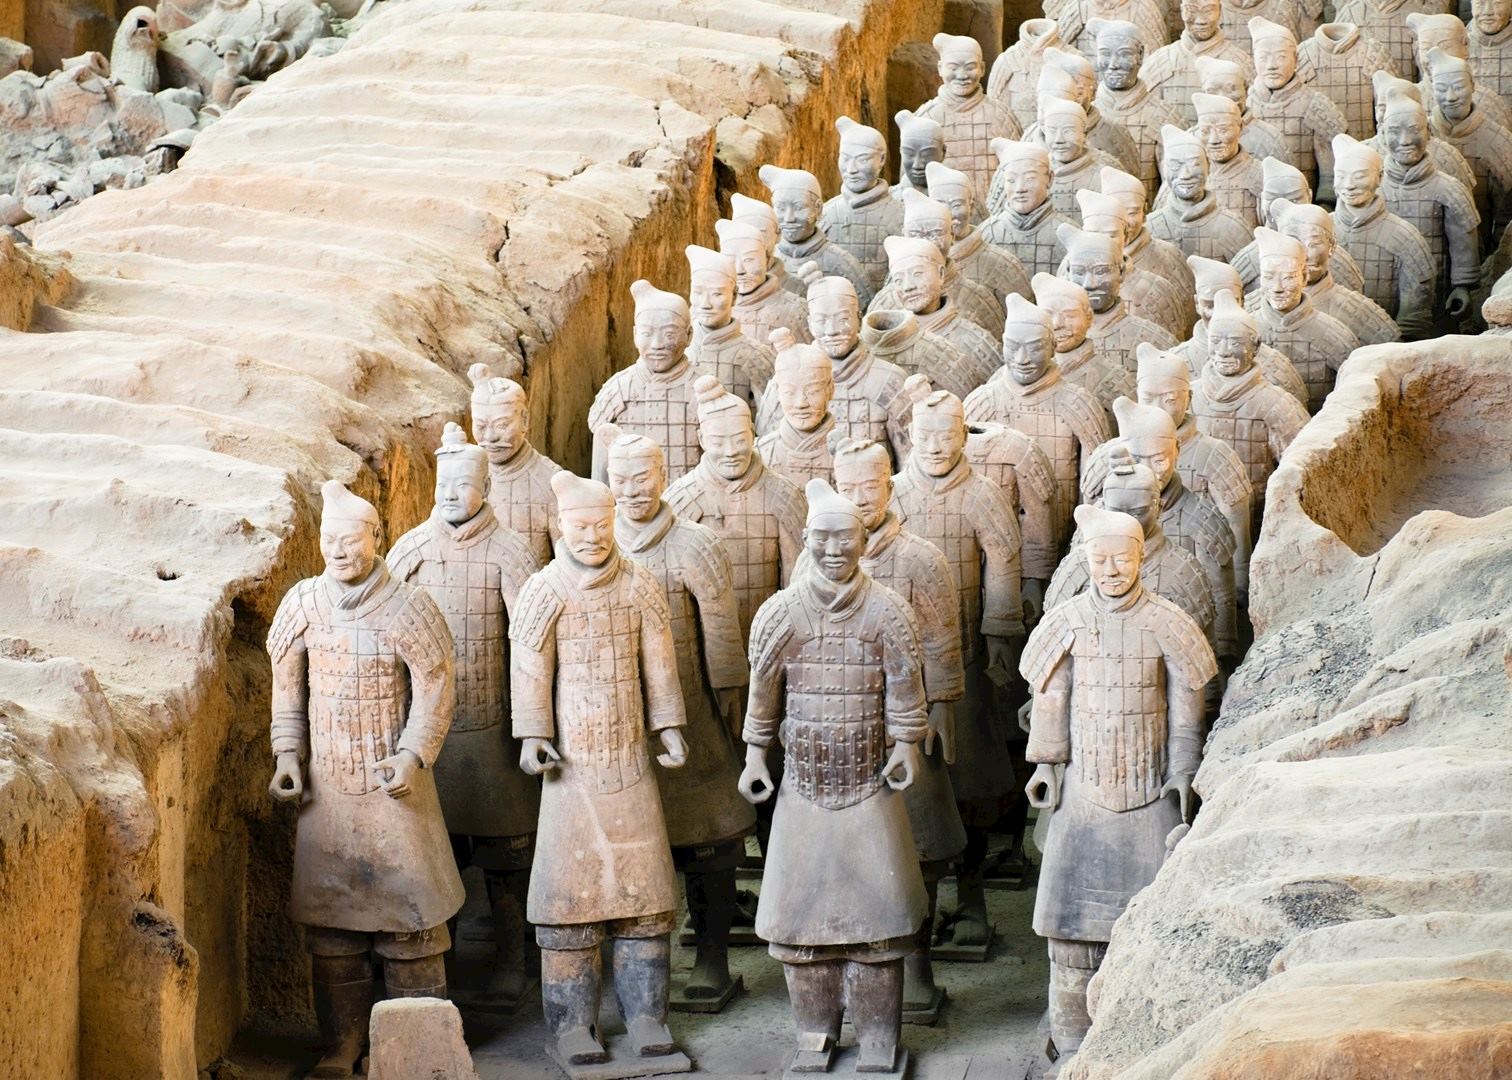 xian terracotta warriors tour